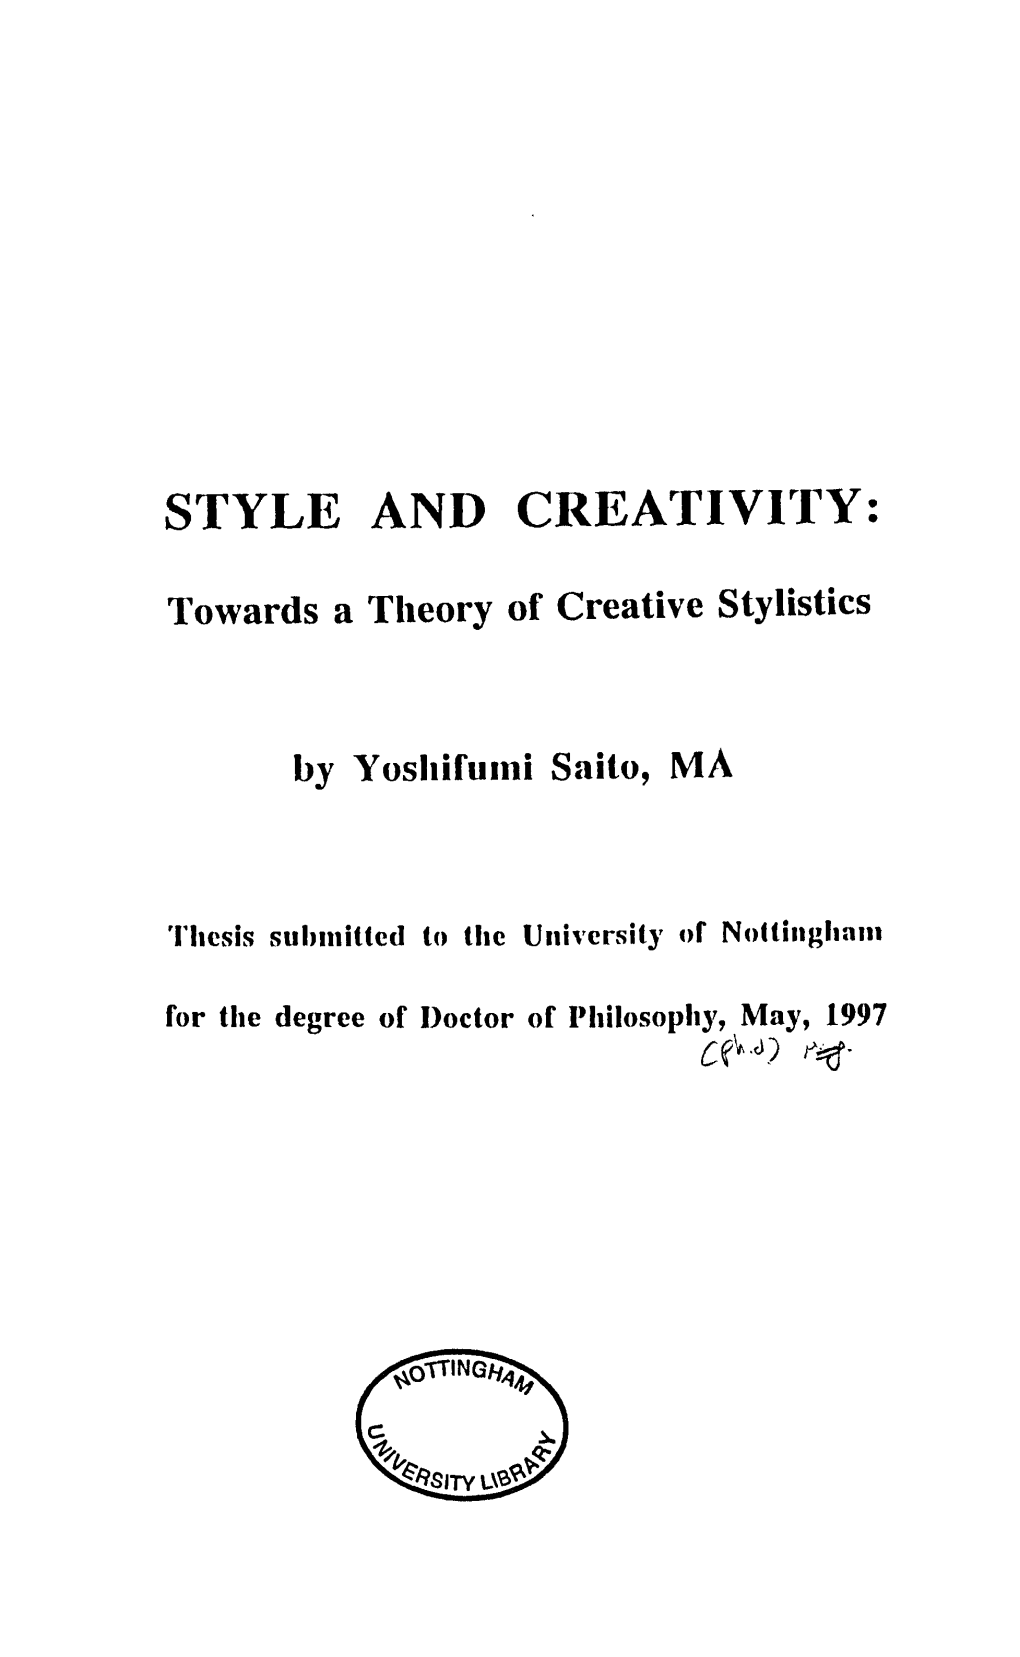 Towards a Theory of Creative Stylistics by Yosliifuini Saito, MA